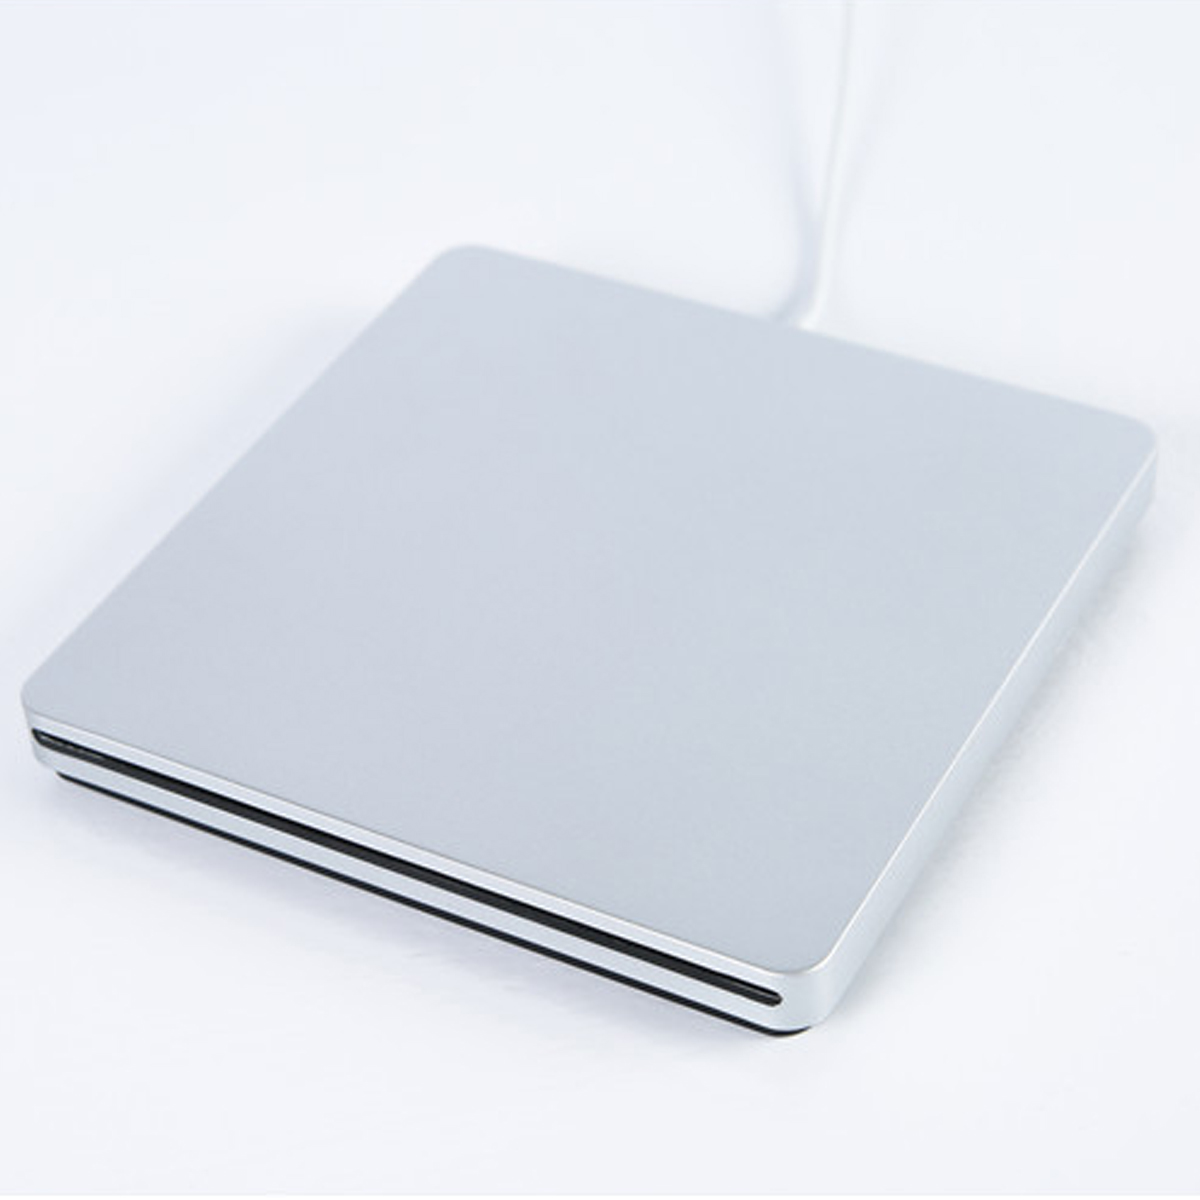 Slim-USB-External-CD-Burner-Reader-Player-CD--DVD-Player-Optical-Drive-for-PC-Laptop-Windows-1762678-10